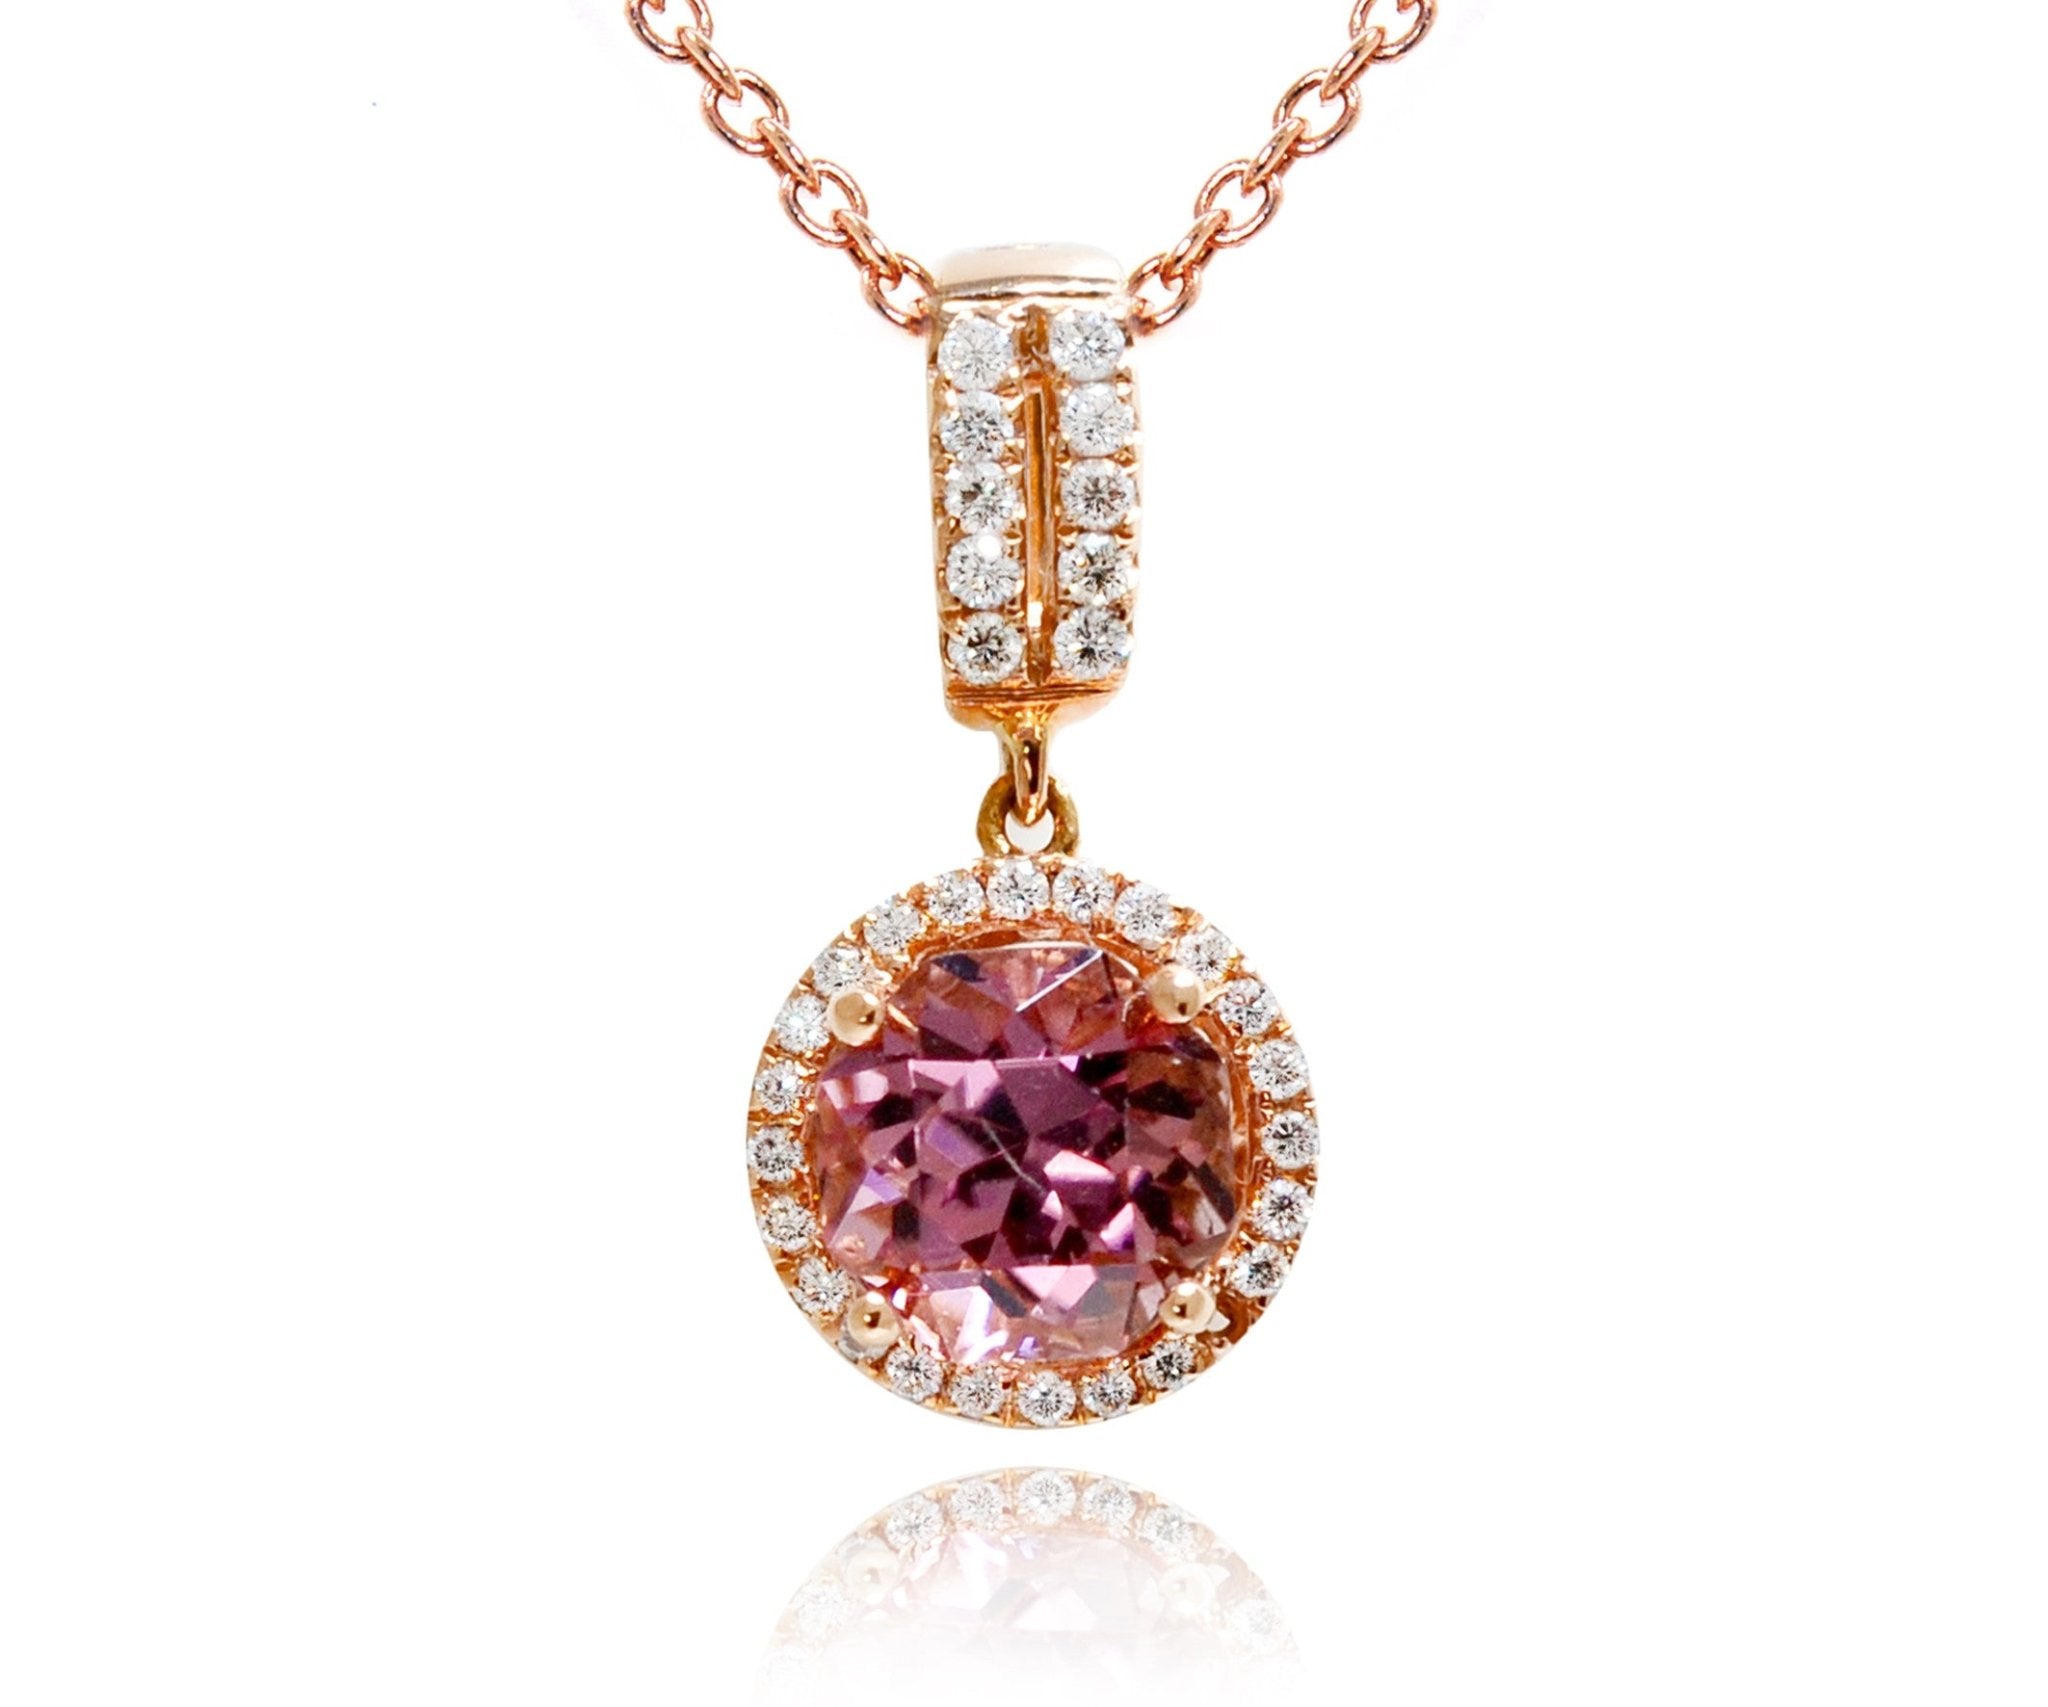 Rose Gold Pink Spinel Pendant with Diamonds - ForeverJewels Design Studio 8